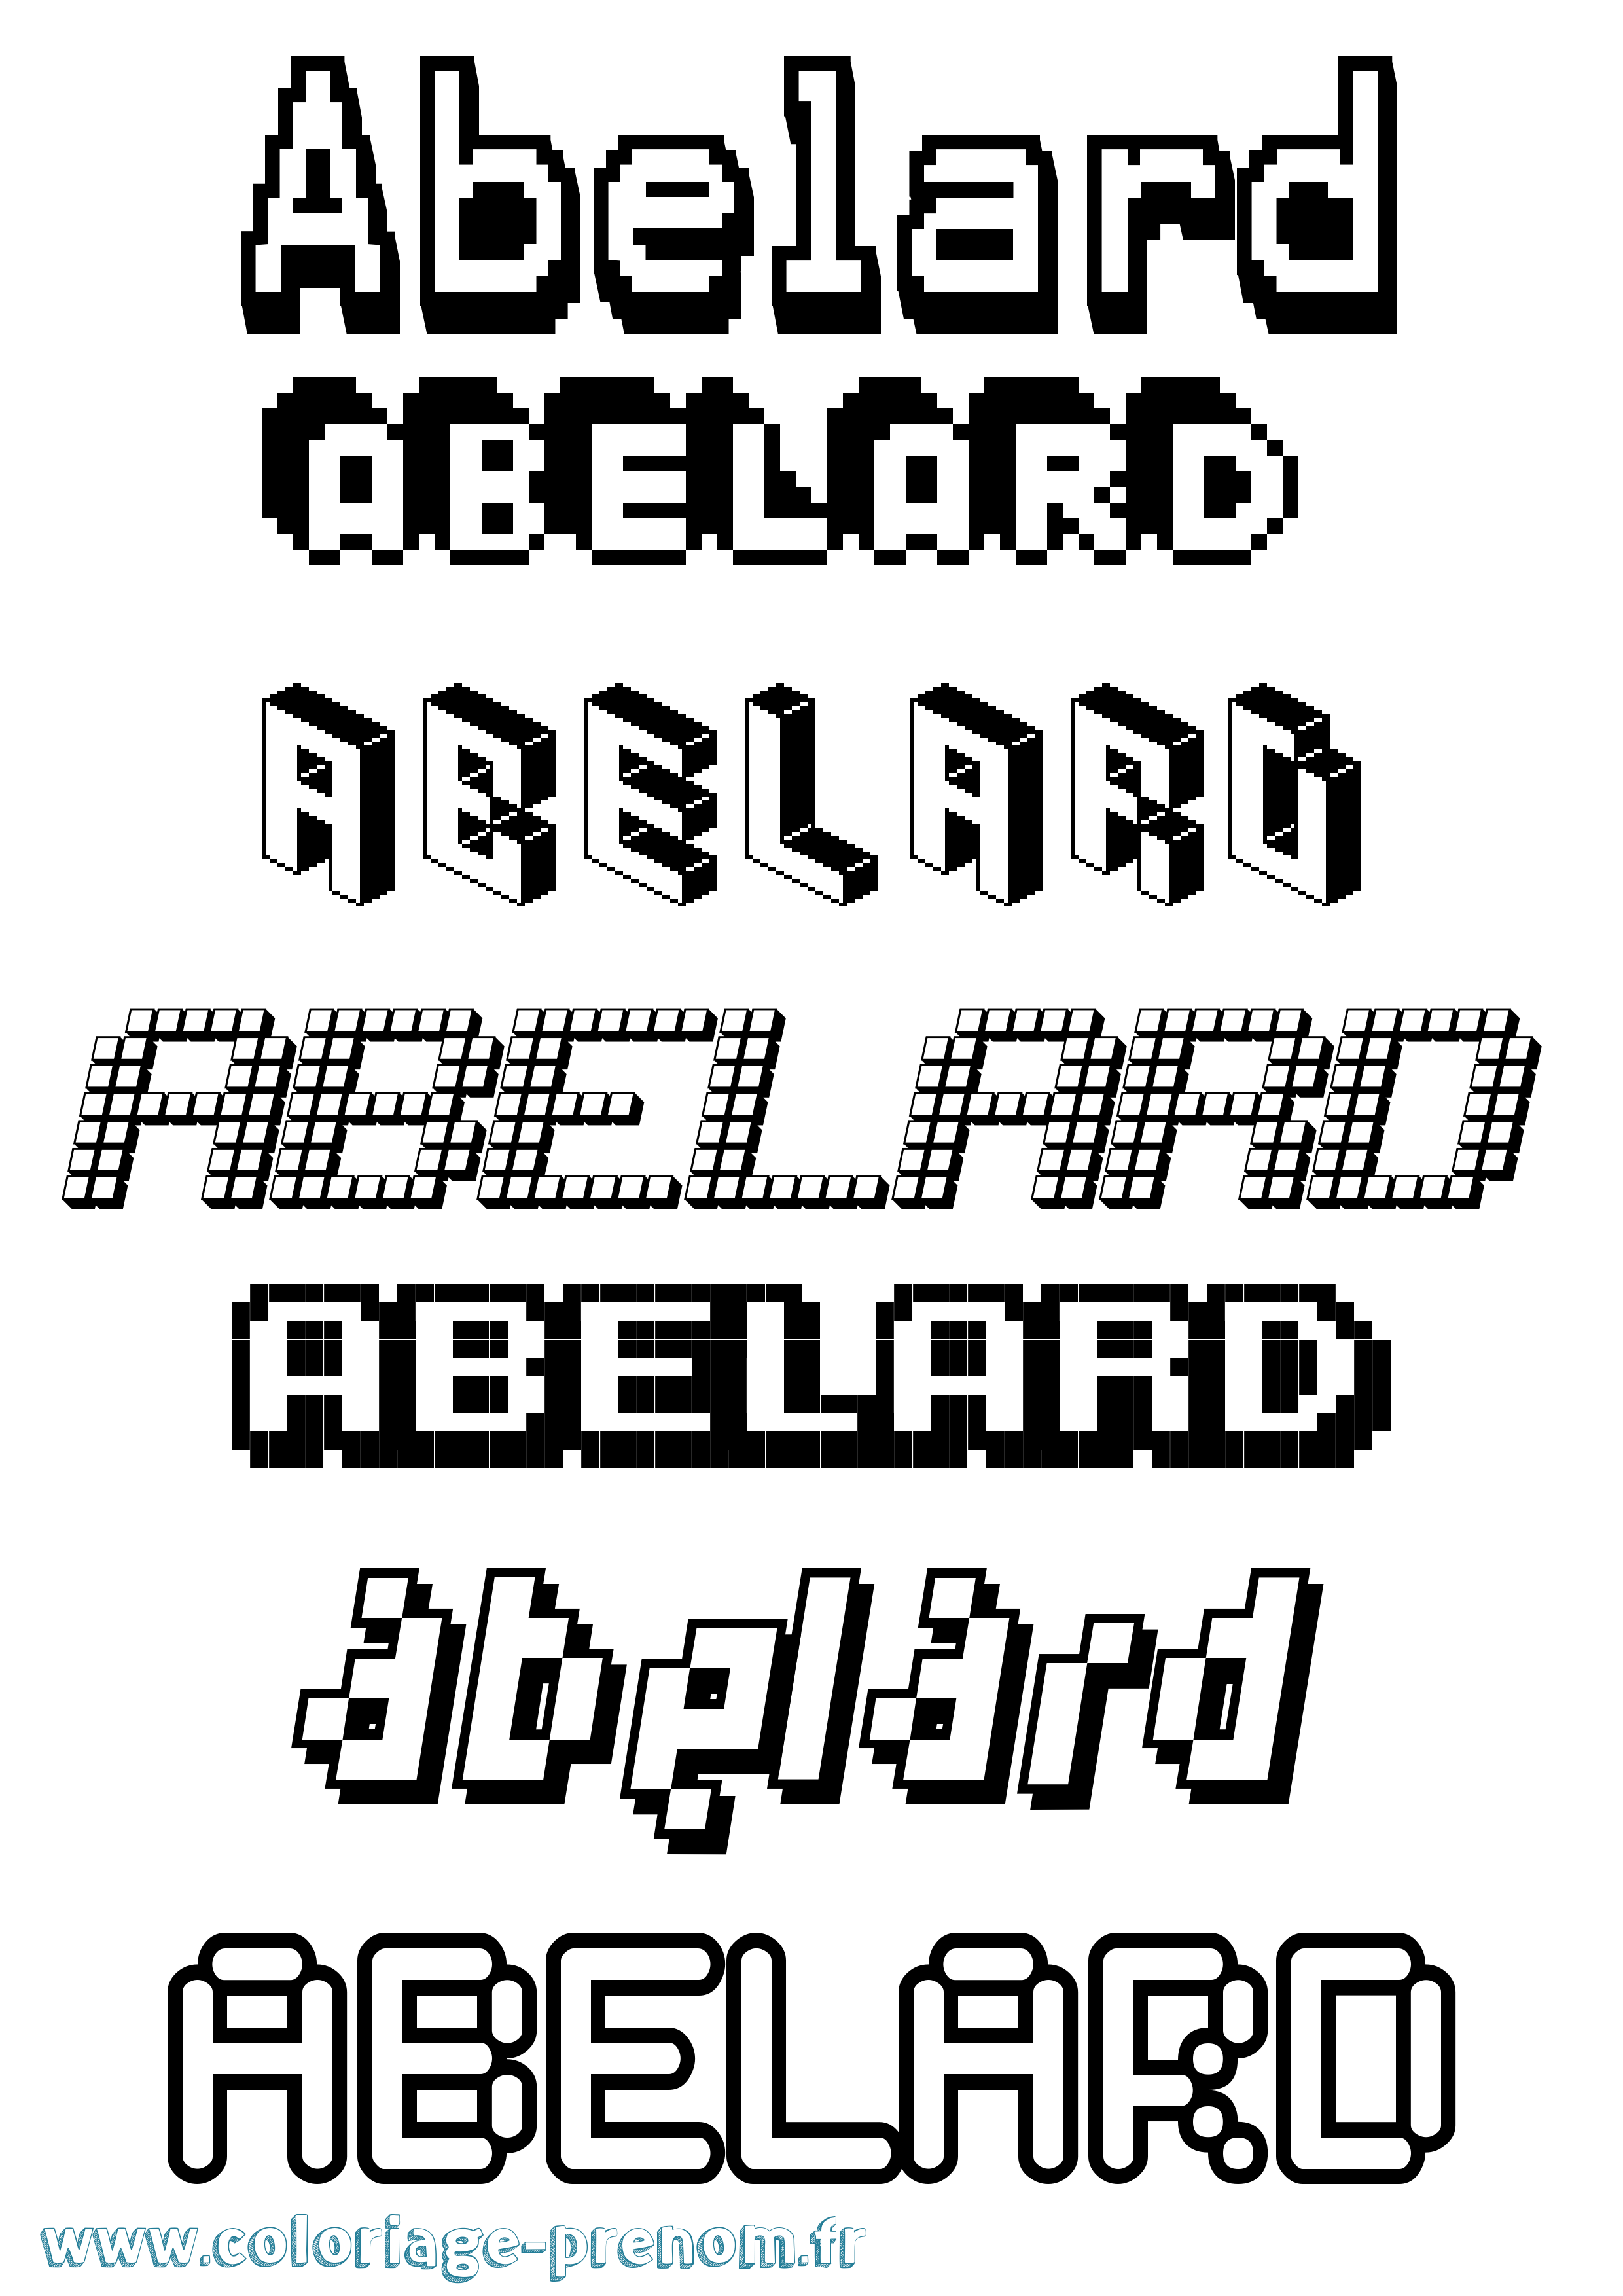 Coloriage prénom Abelard Pixel